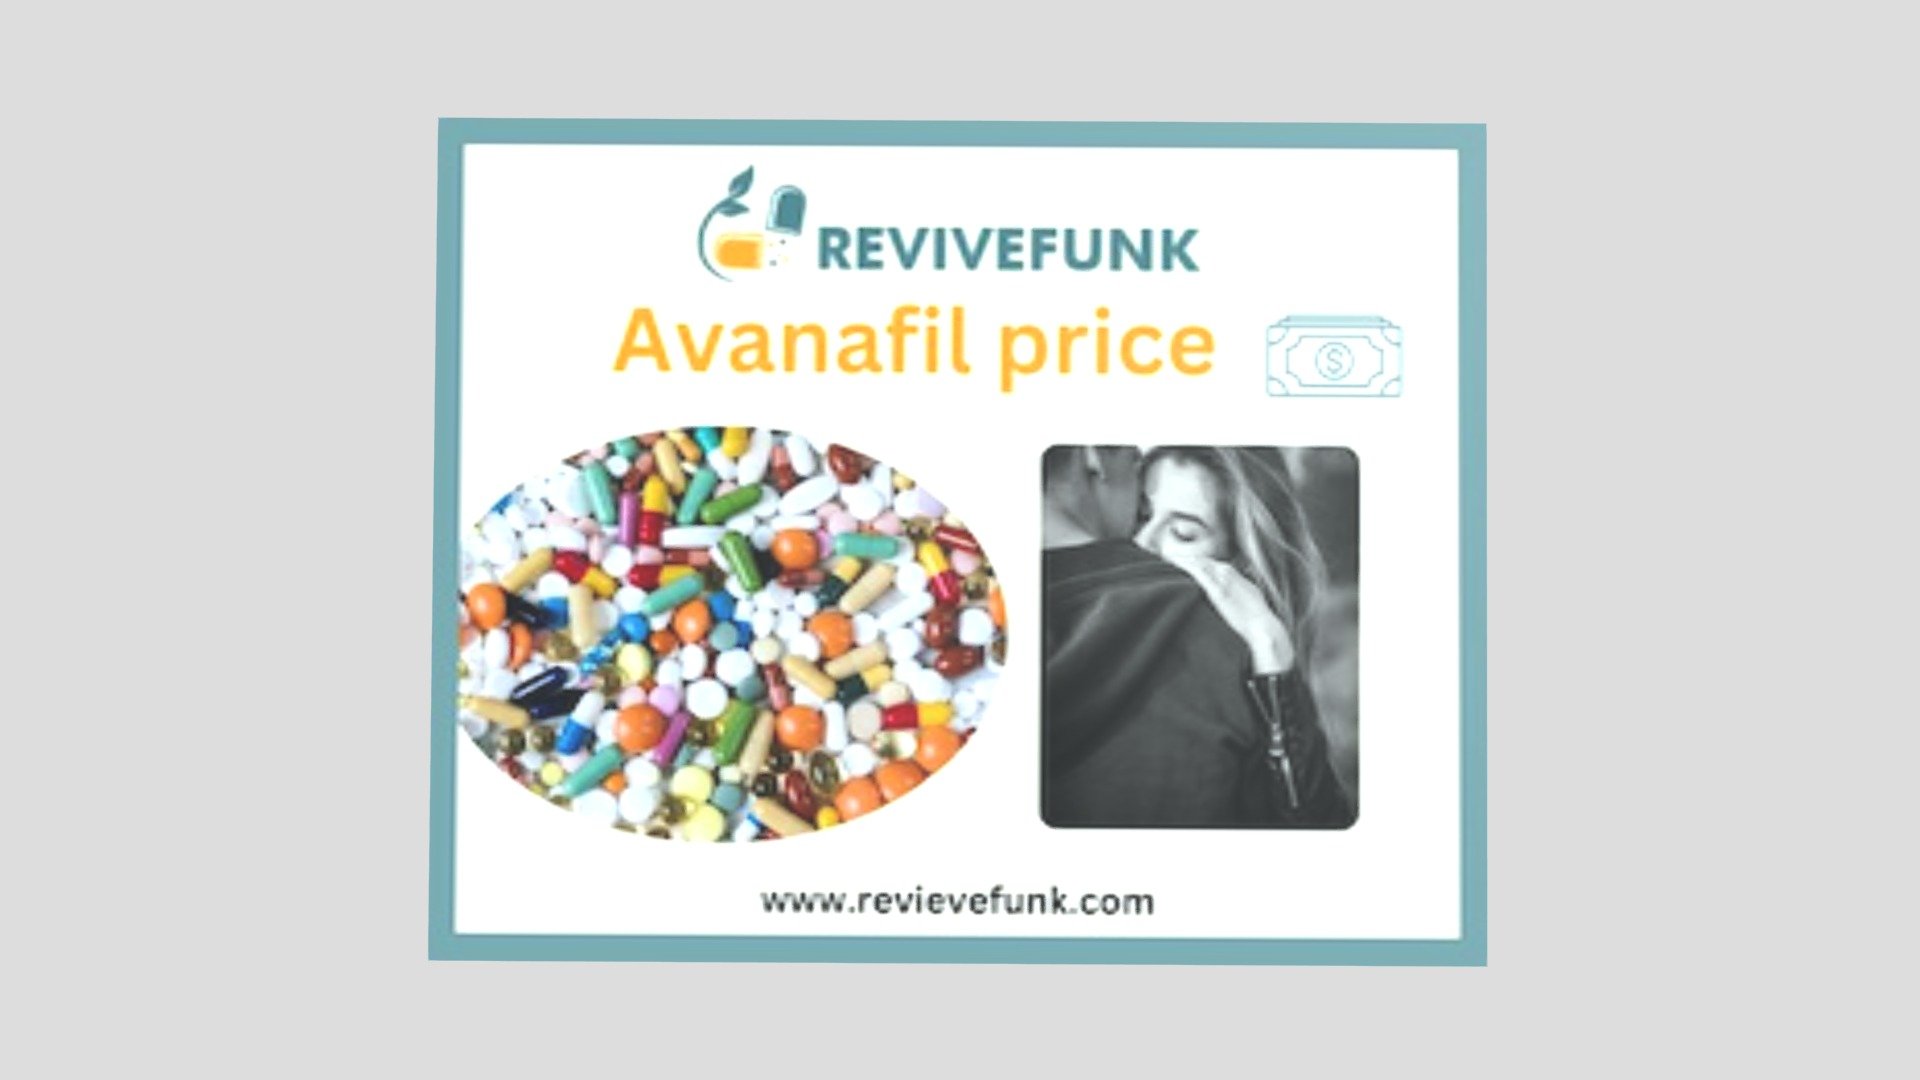 Avanafil Price - 3D model by avanafilprice [dfbbdfc] - Sketchfab